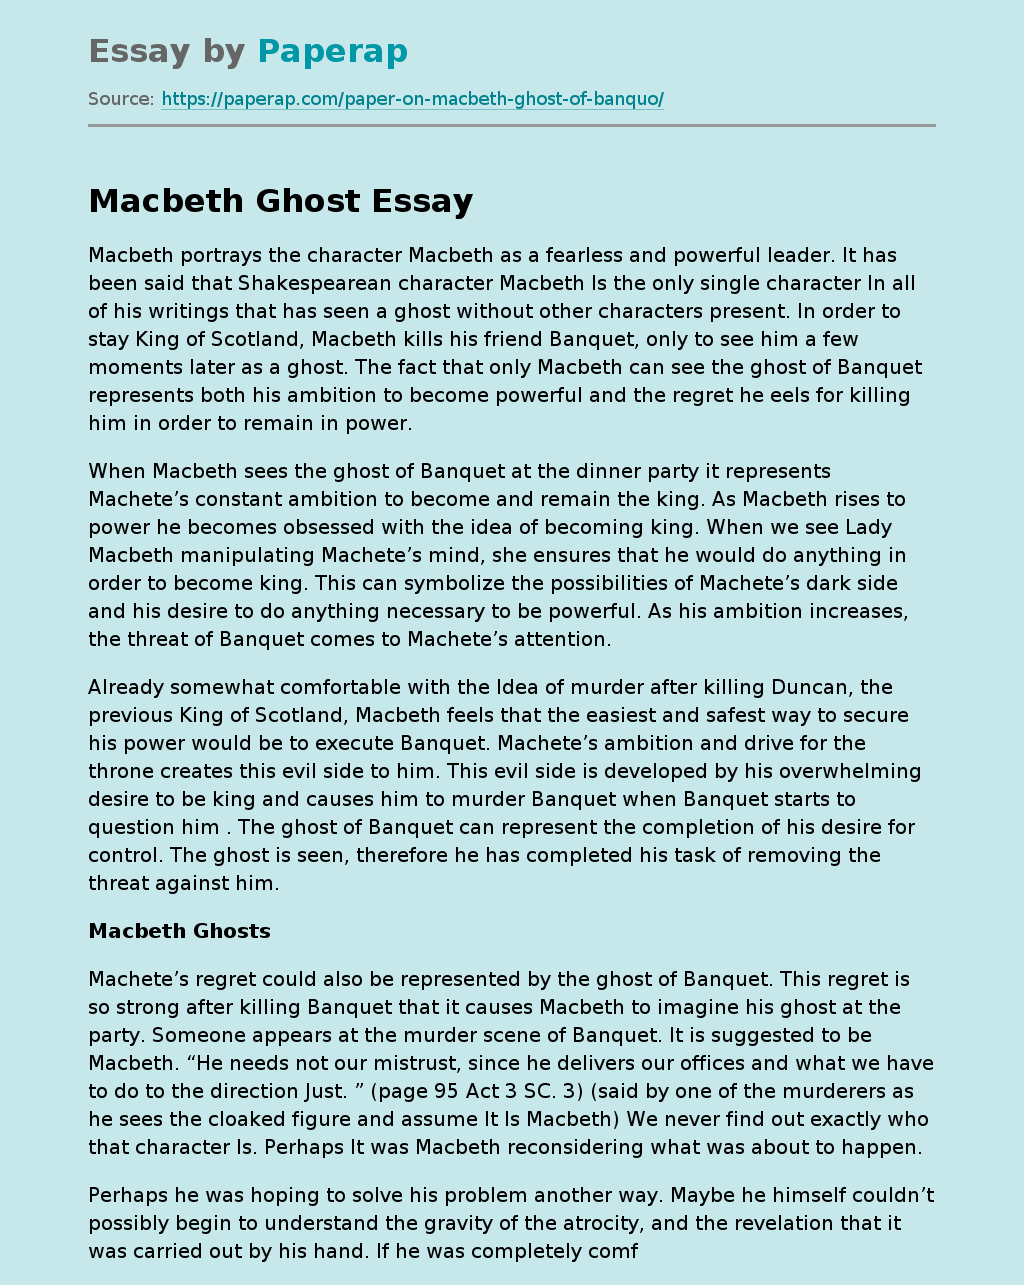 Macbeth: Fearless and Powerful Leader